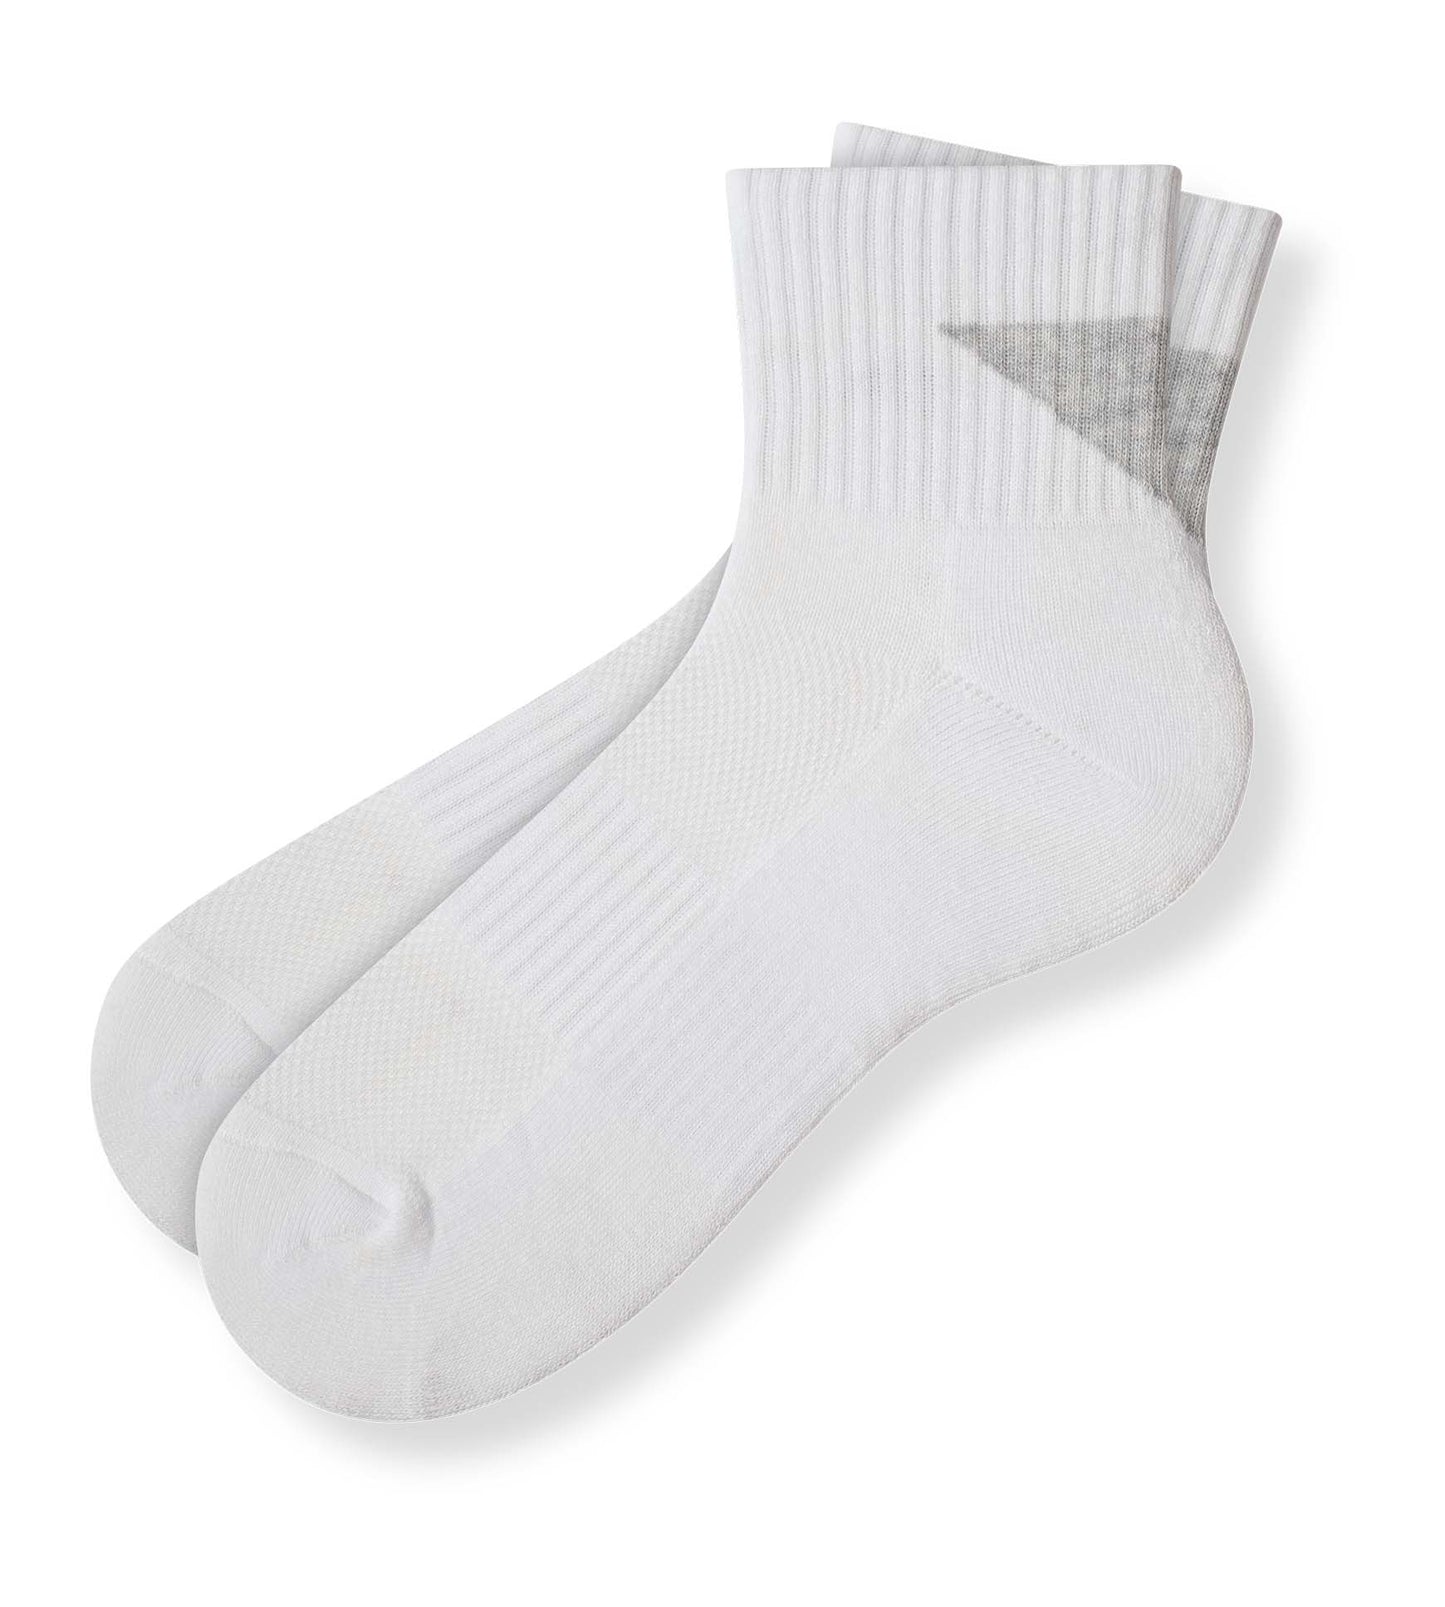 BOWO Cushion Ankle Socks 3 pack Gains boro, Silver, Gains boro, Dark Gray, Light Gray, Gains boro, Whitesmoke, Gray, Silver